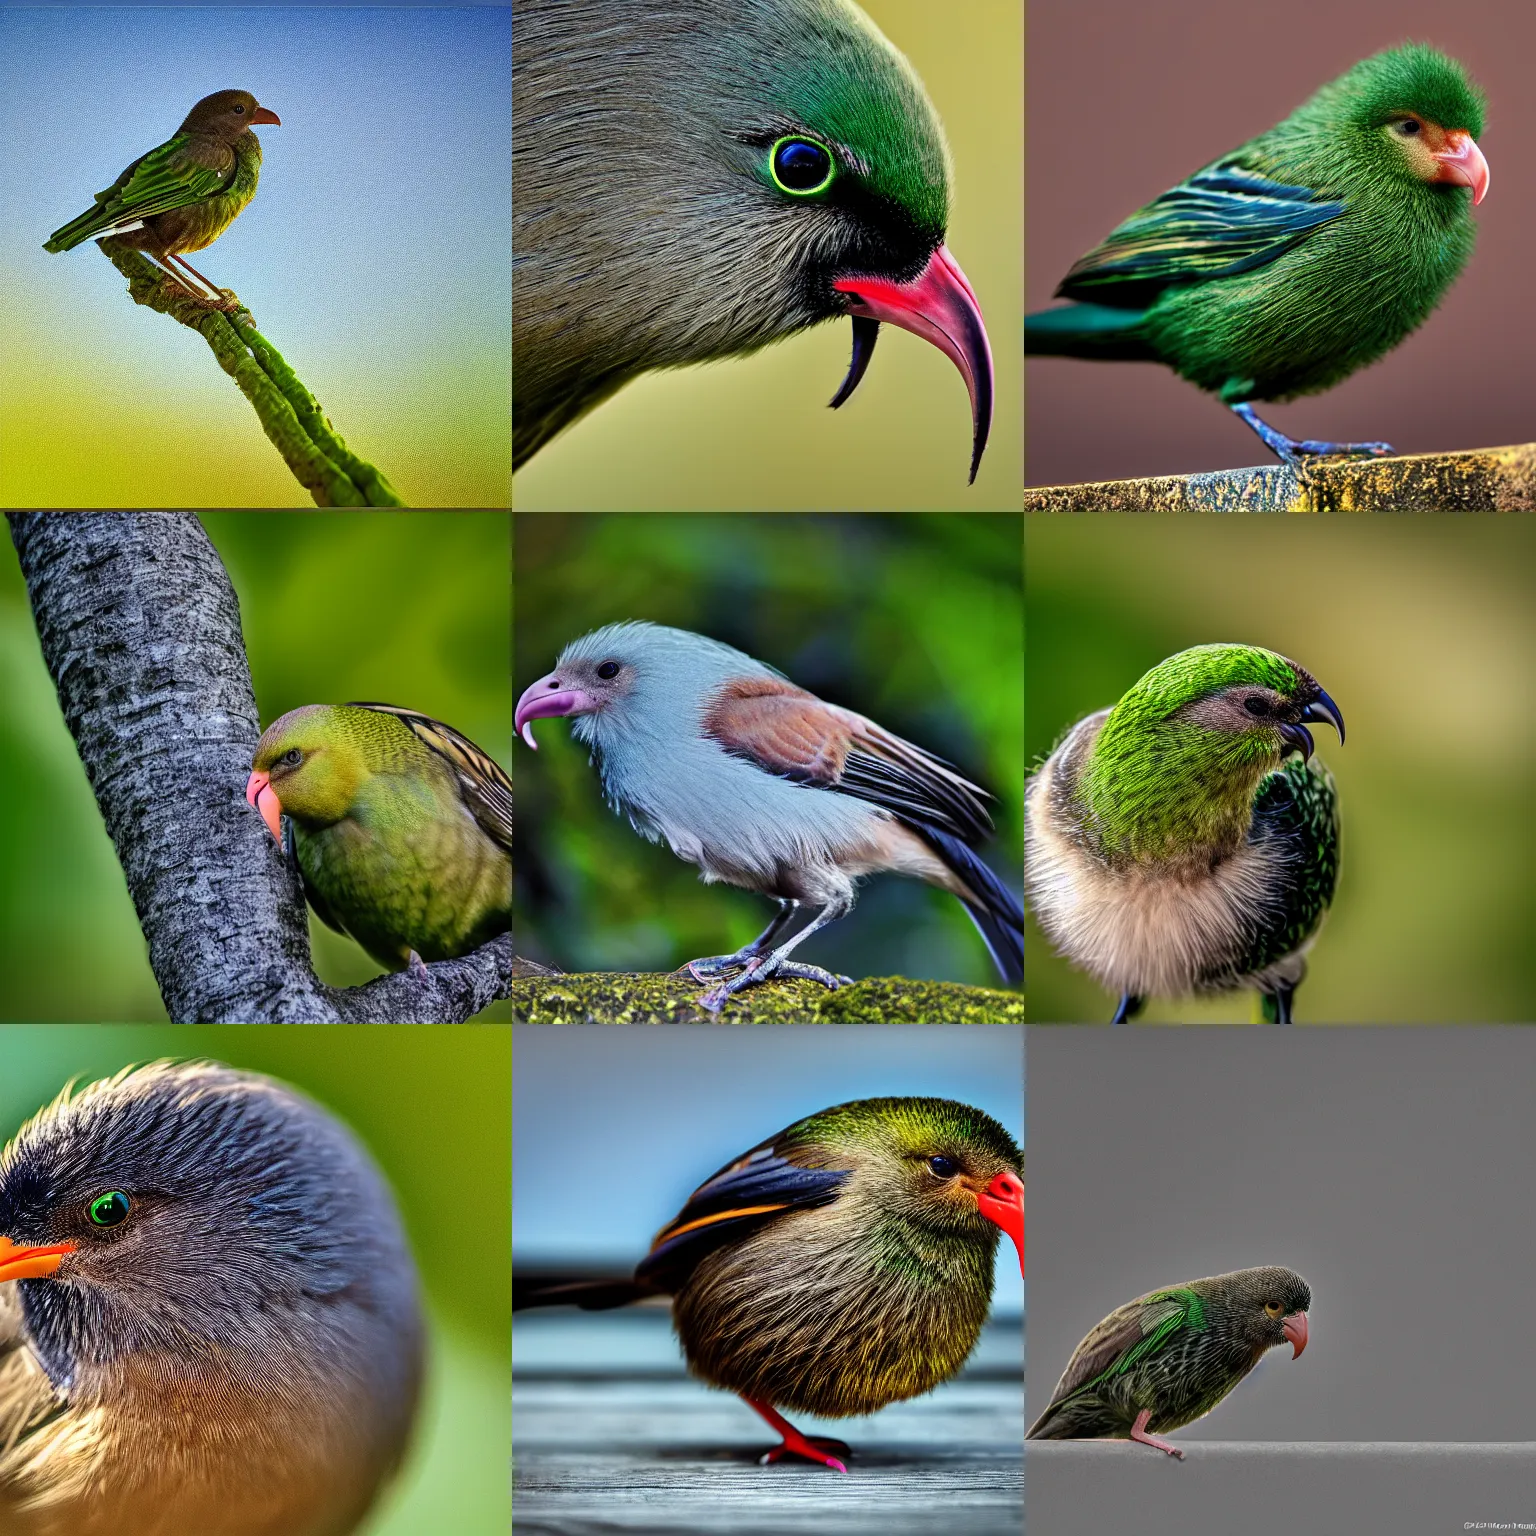 Prompt: kiwi bird, XF IQ4, 150MP, 50mm, f/1.4, ISO 200, 1/160s, natural light, Adobe Photoshop, Adobe Lightroom, DxO Photolab, polarizing filter, Sense of Depth, AI enhanced, HDR